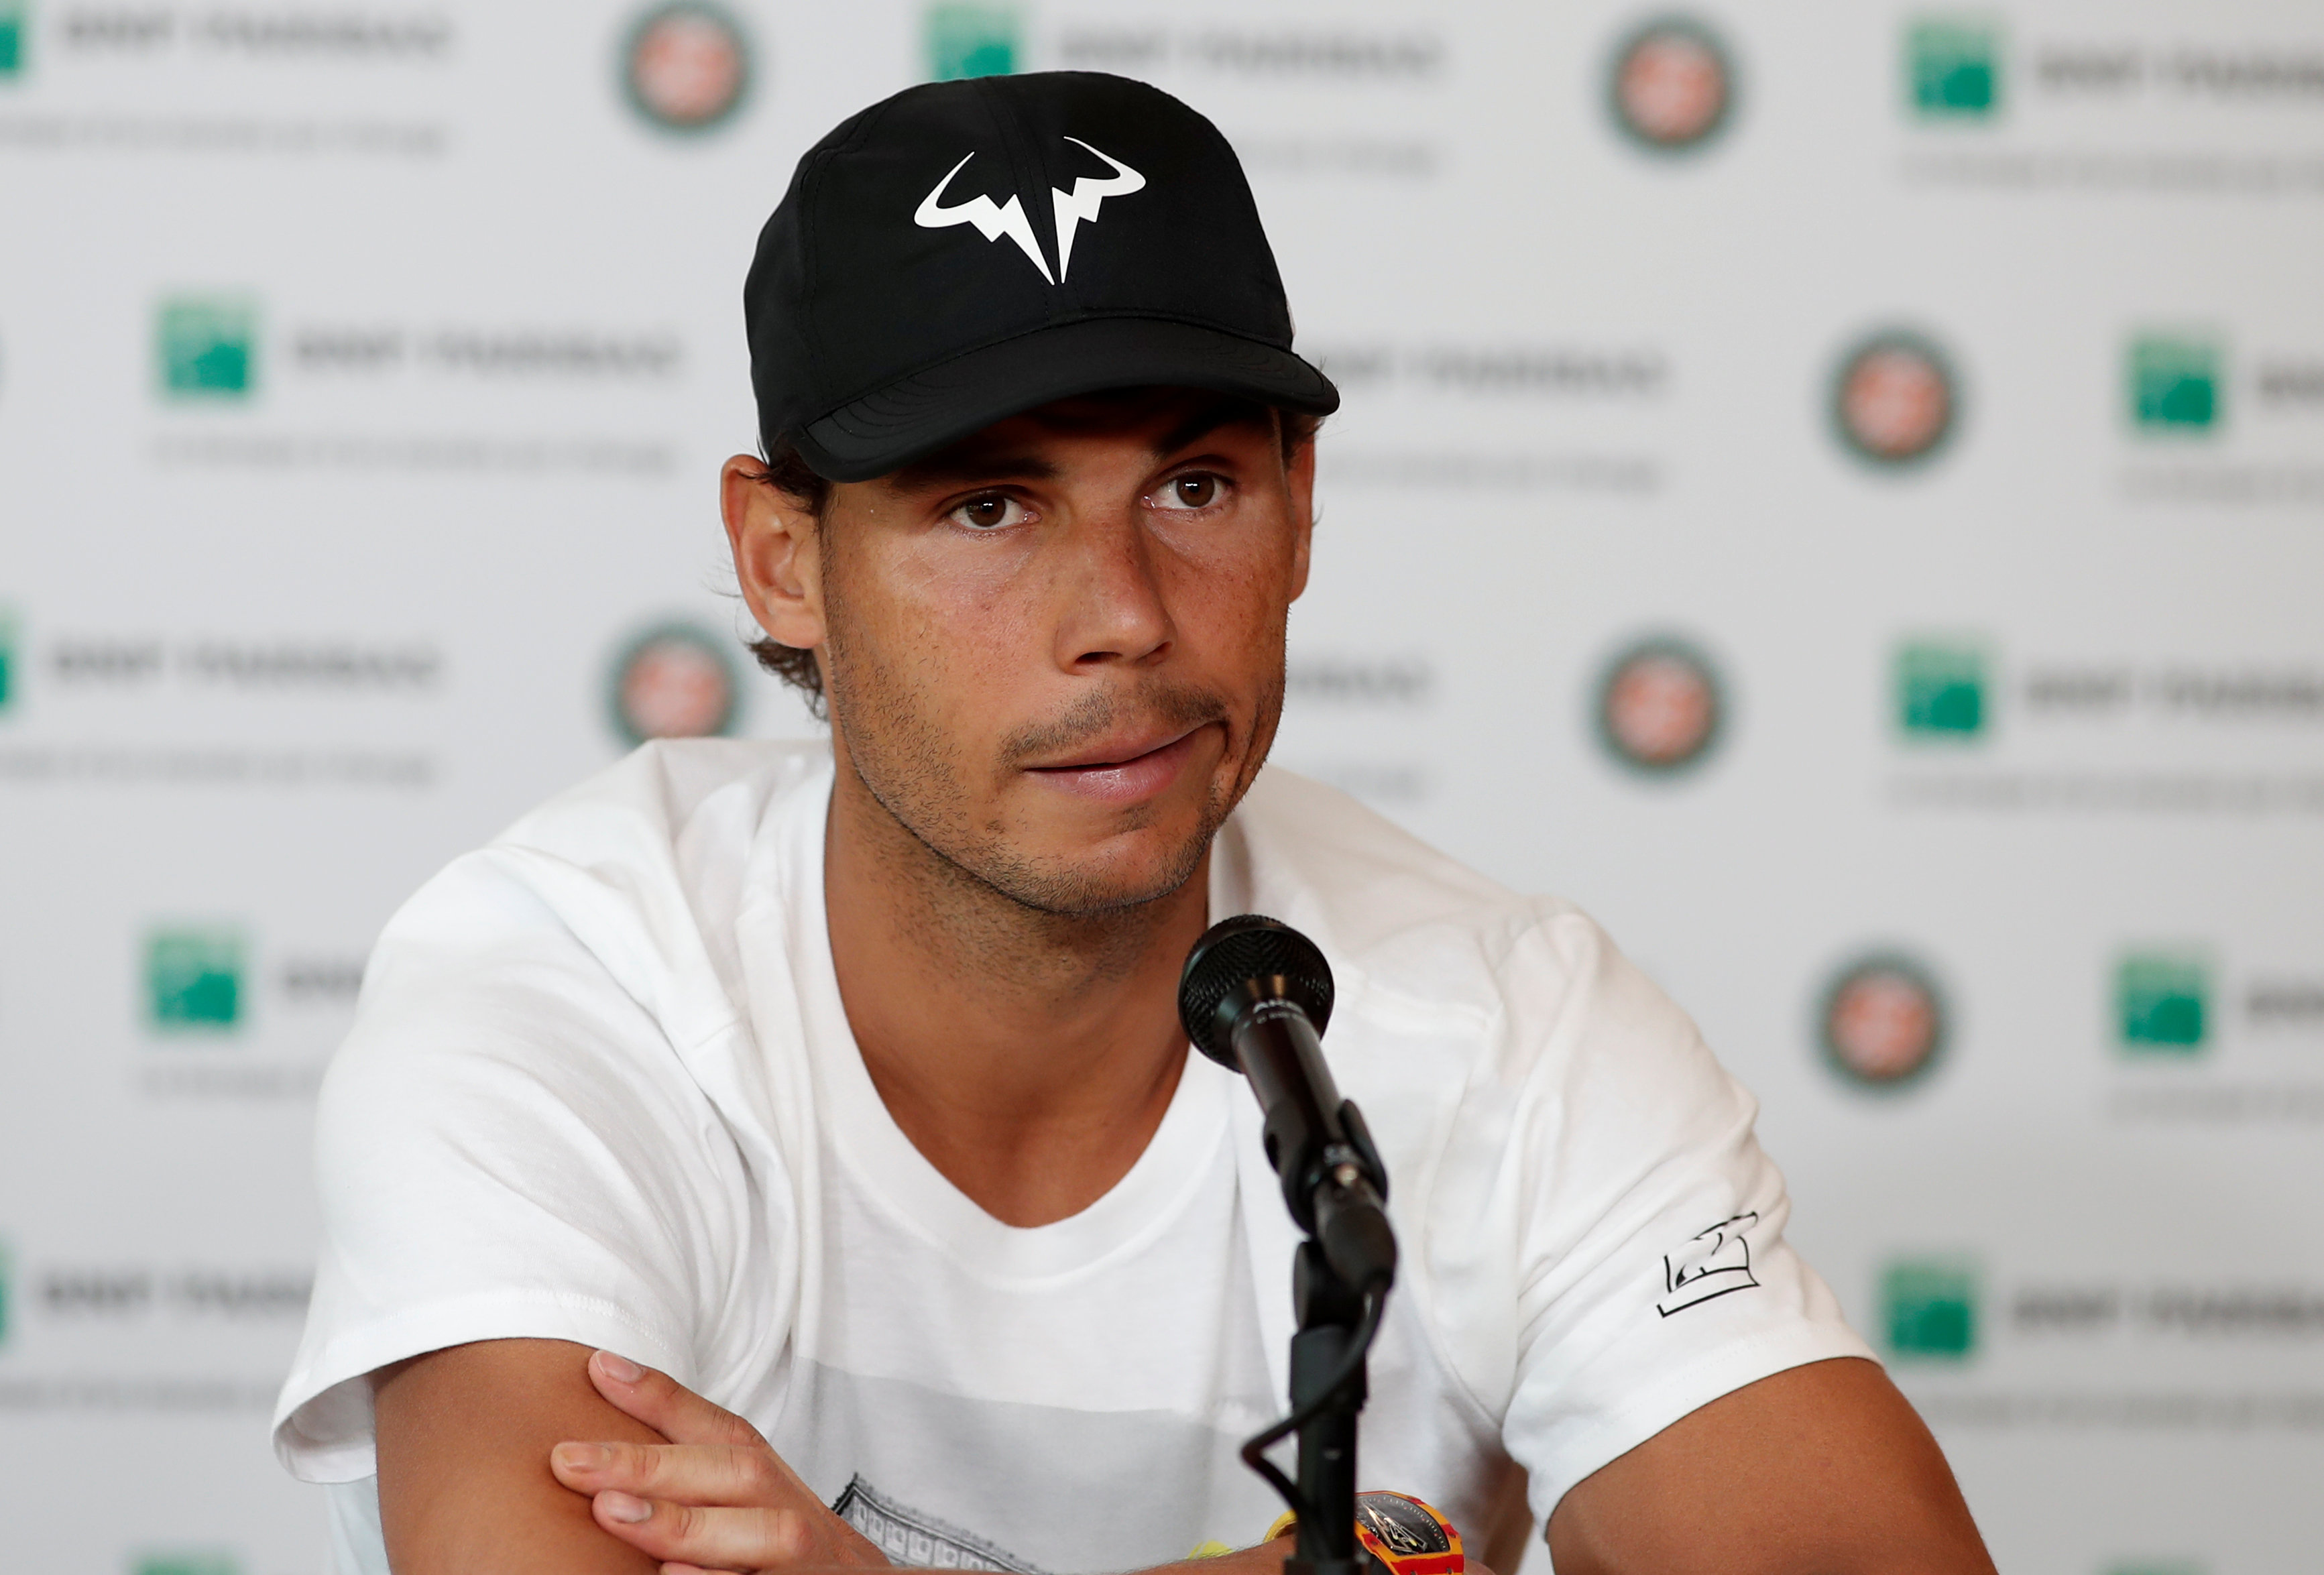 Tennis: Records don't matter for record-breaker Nadal